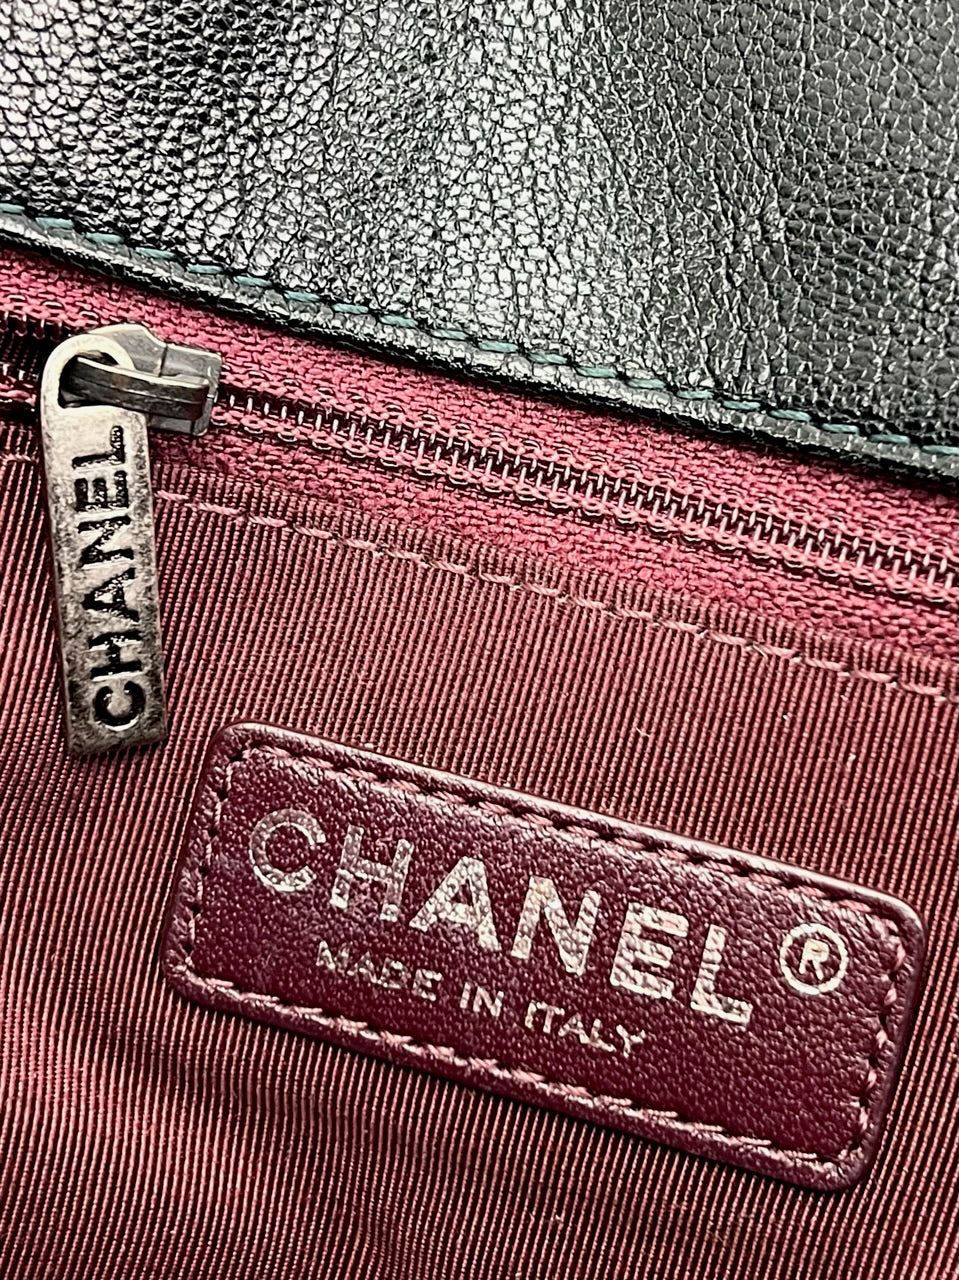 Chanel Gabrielle leather crossbody bag - ShopStyle